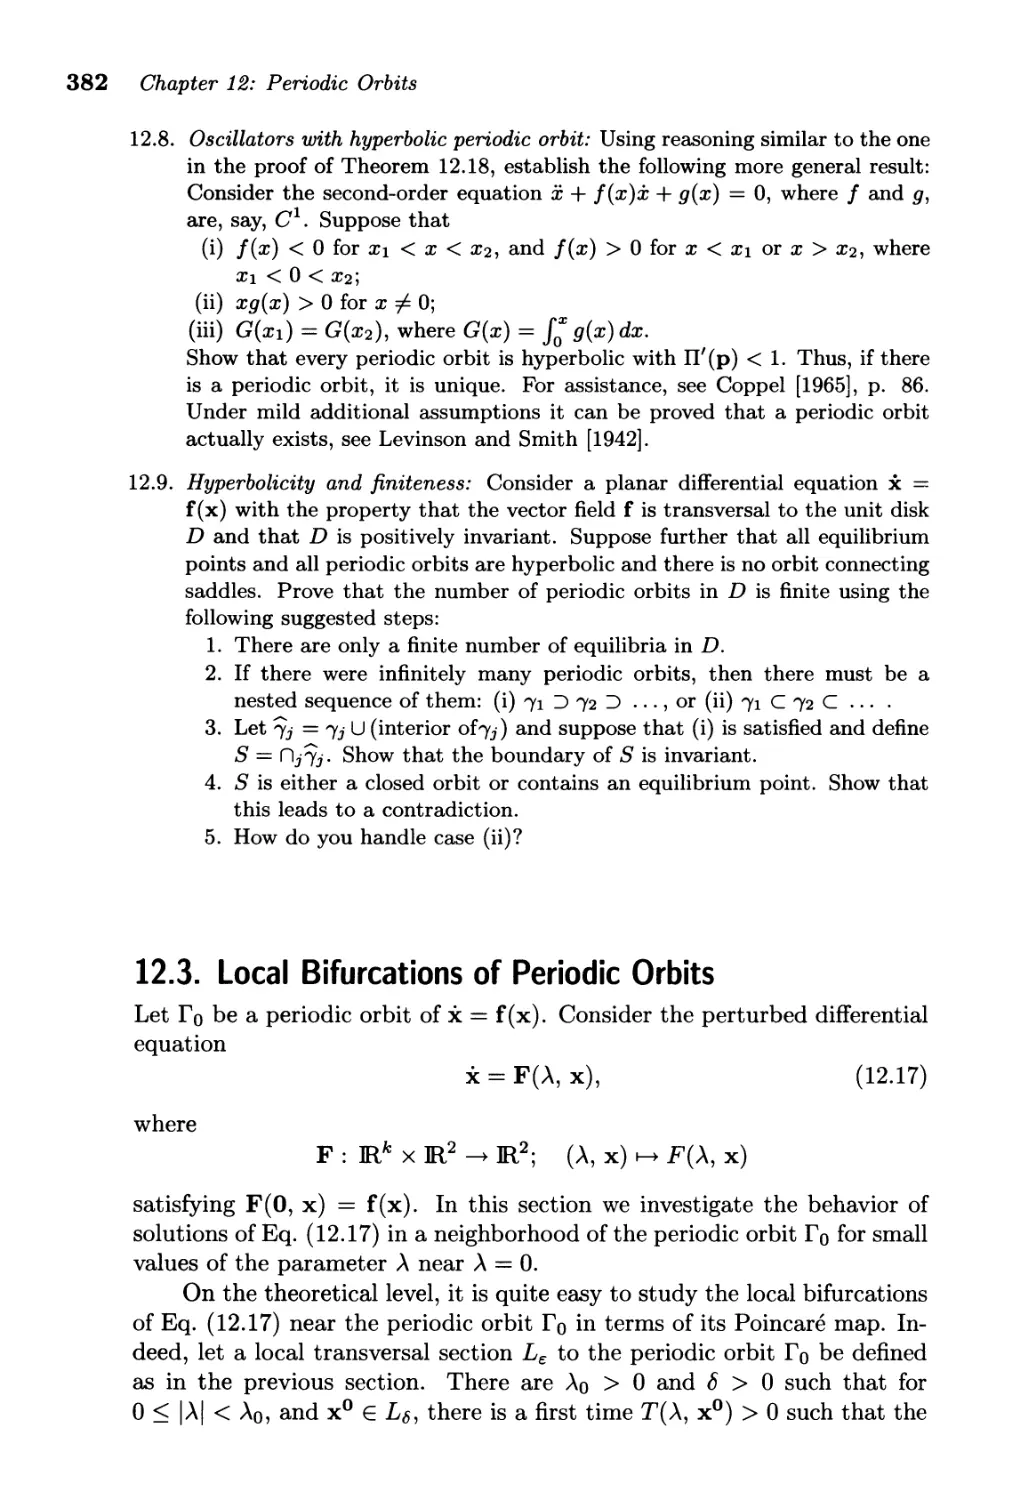 12.3. Local Bifurcations of Periodic Orbits